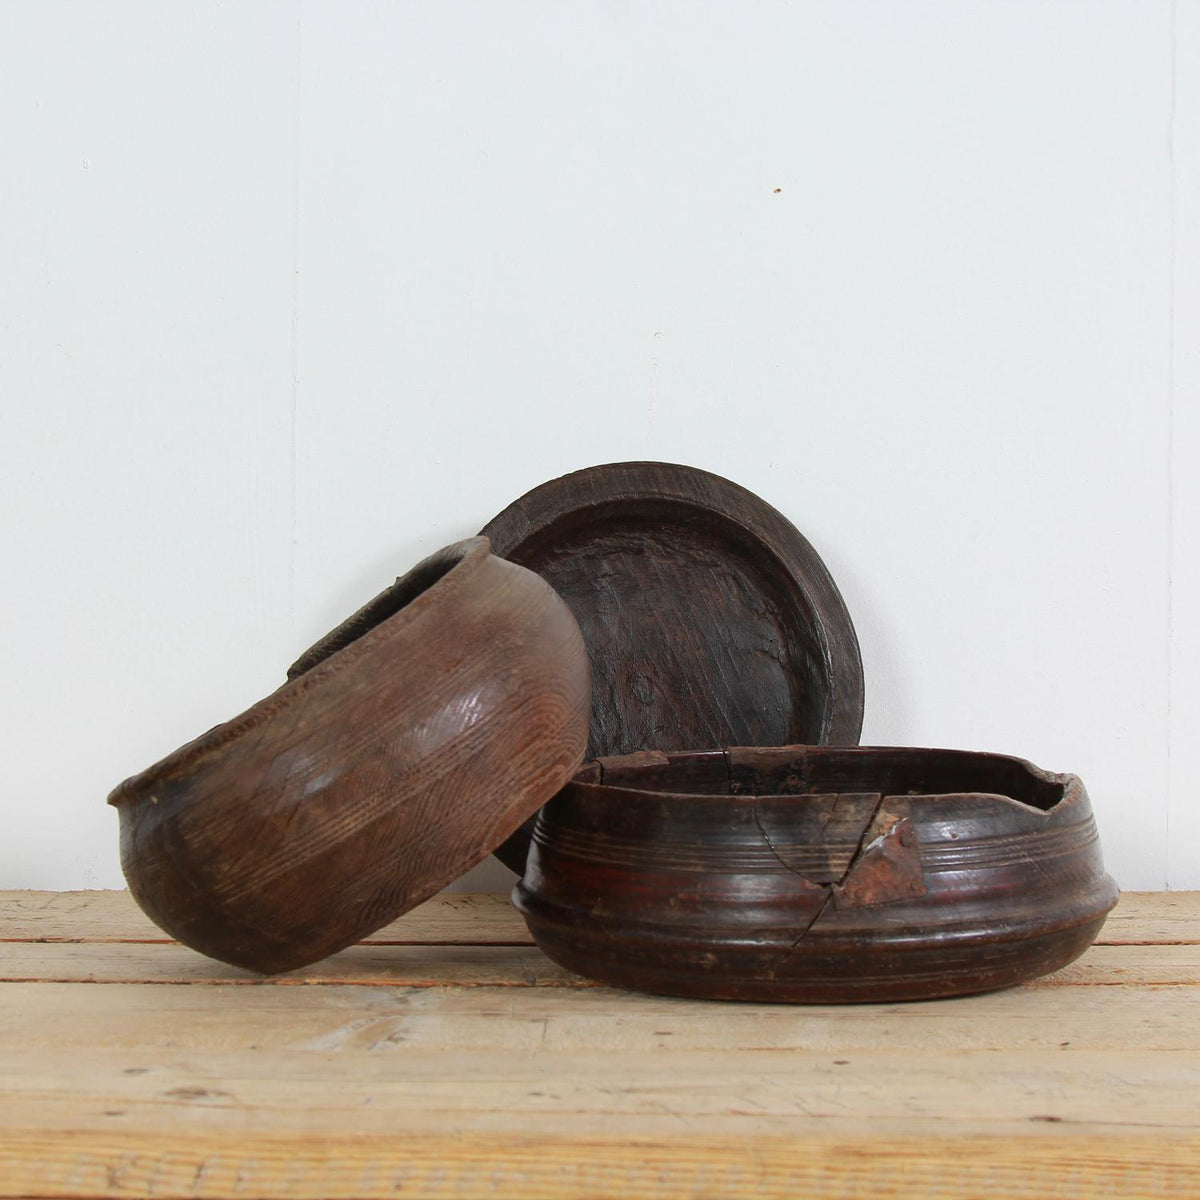 Collection of Three Primitive Wabi Sabi Wooden Bowls